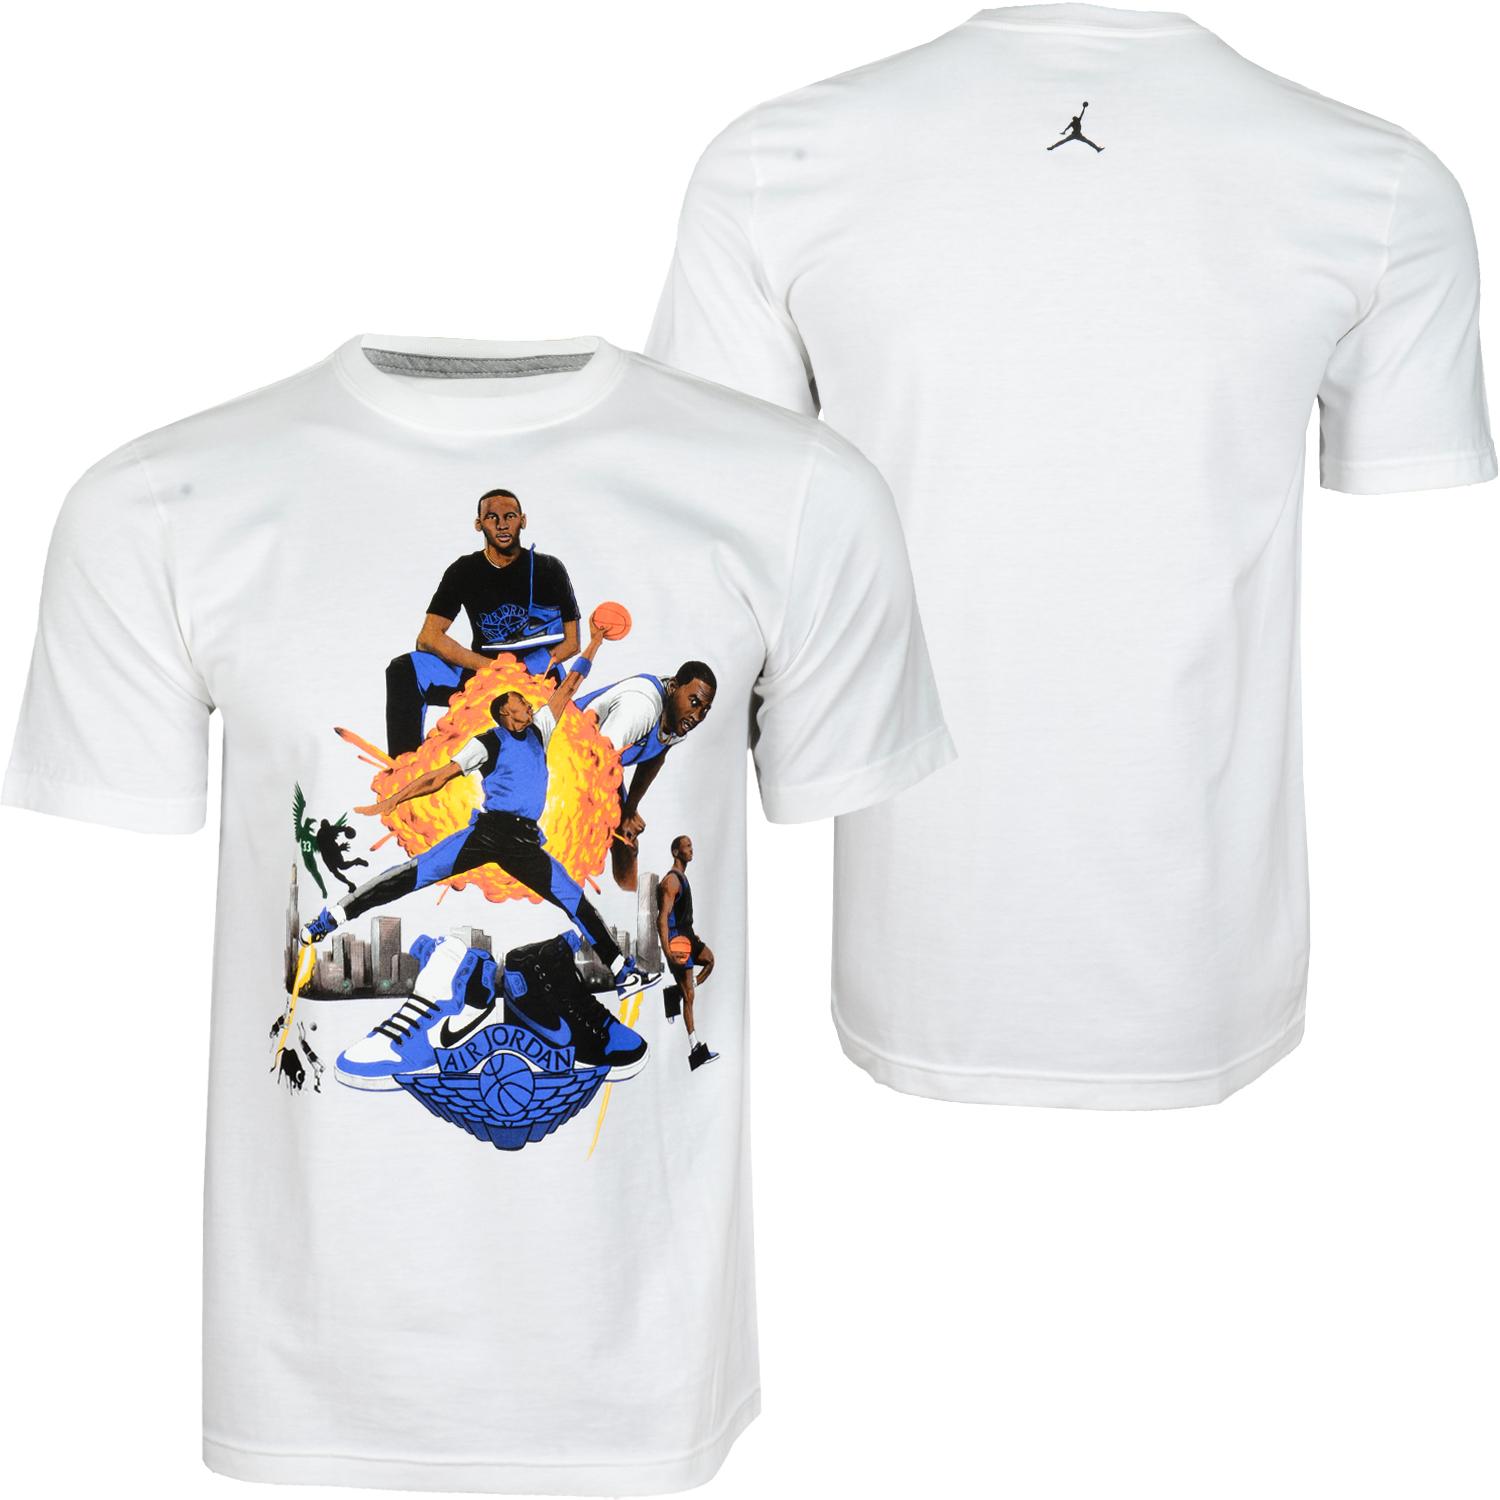 Foto Nike Air Jordan 1 Picturesque T-shirt Blanco foto 115287